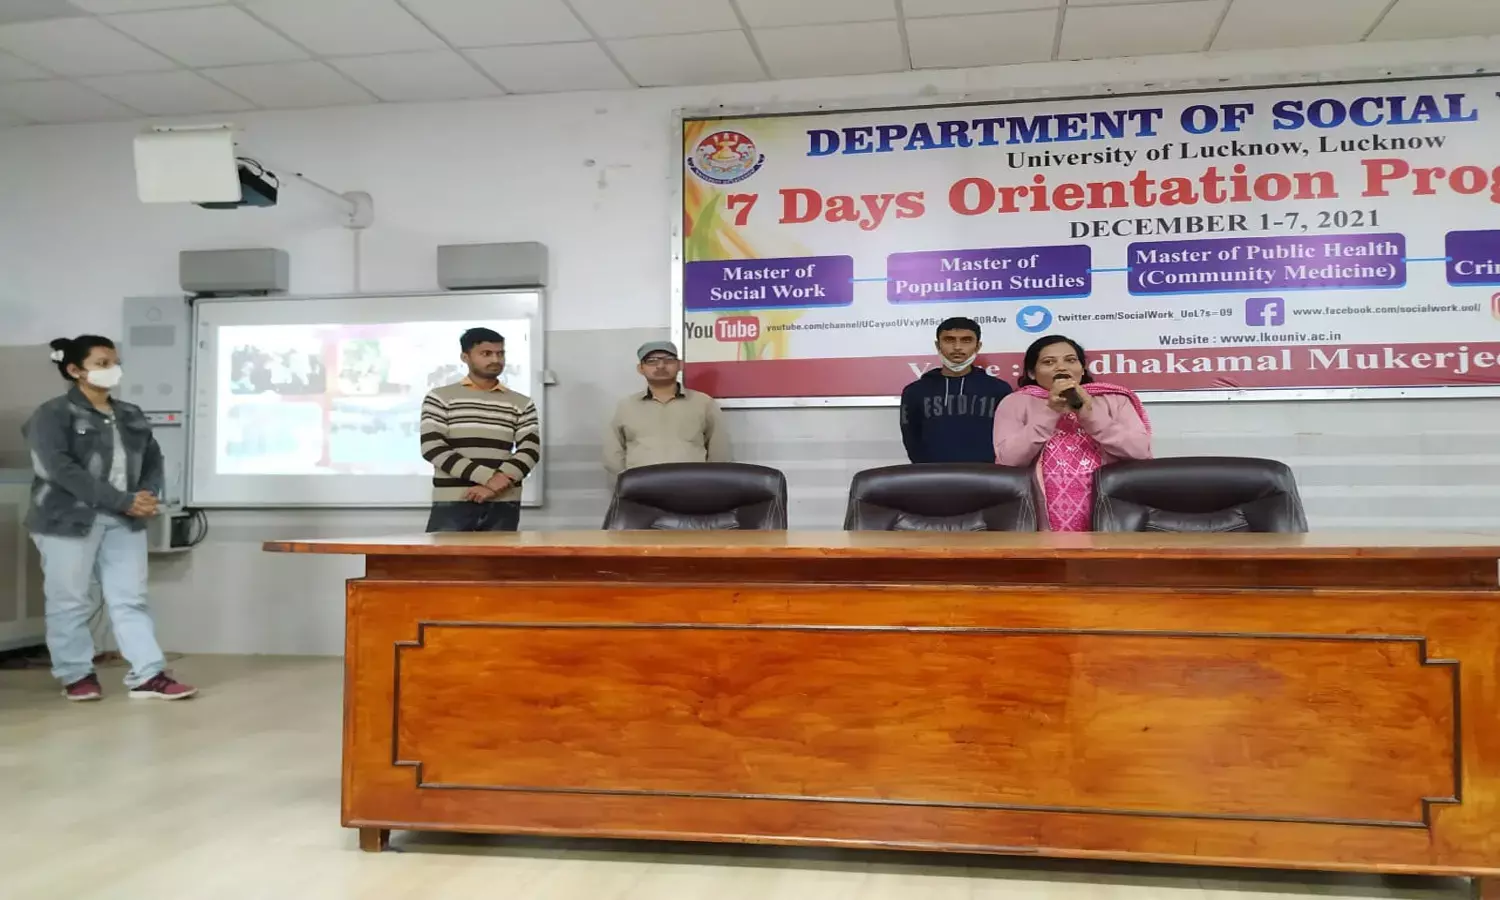 Department of Social Work organizes 7 days Orientation Program at University of Lucknow